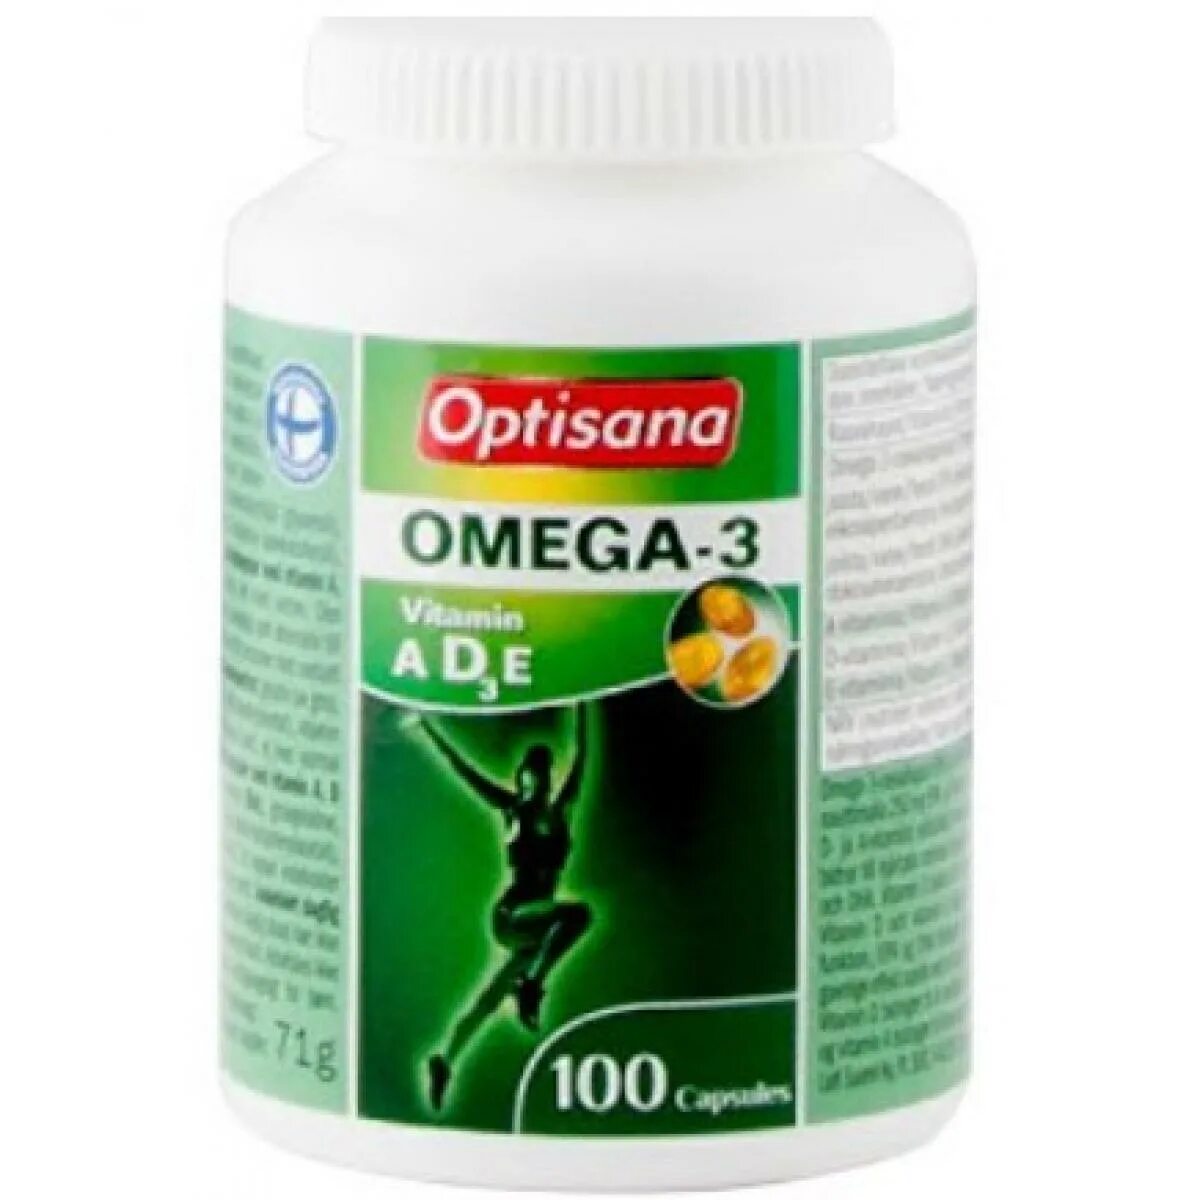 Витамины d3 омега 3. Витамины omega3 + Ade Optisana 100 шт. Финские витамины Омега 3 Оптисана. Омега 3 с витаминами Оптисана. Optisana Omega-3 из Финляндии.